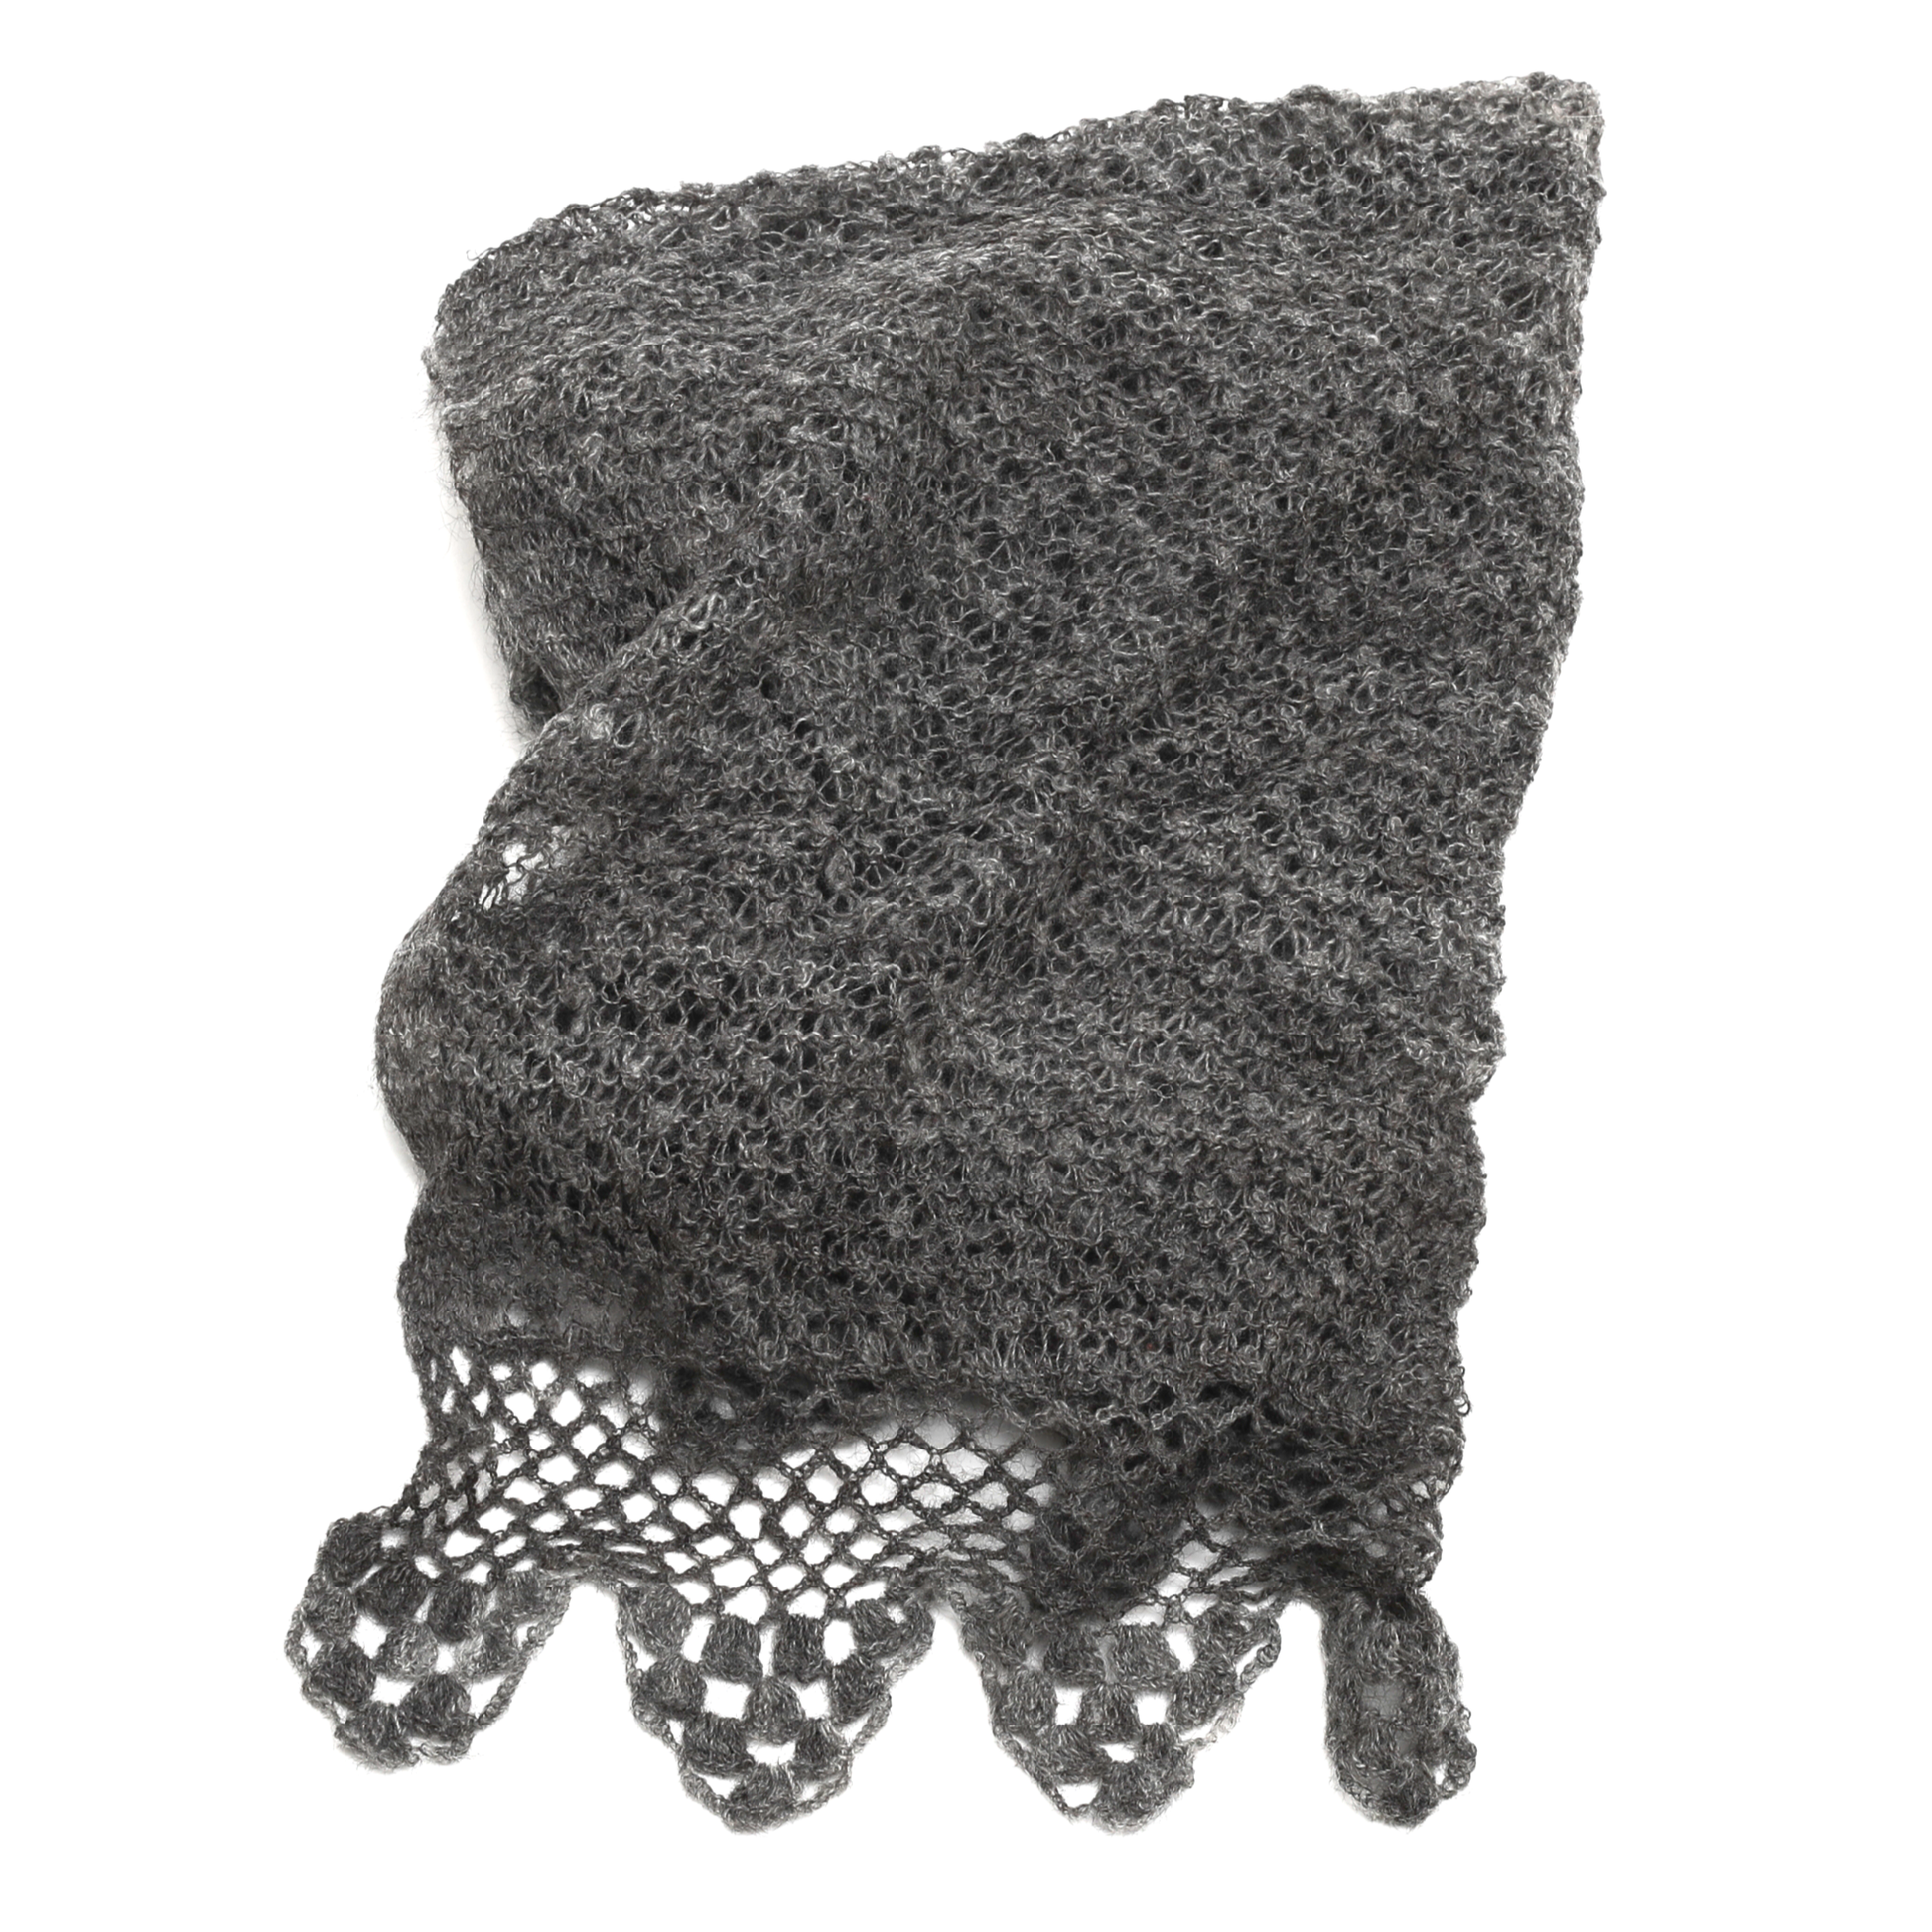 Intiearth-peruvian-handspun-alpaca-handknit-scarf-shawl-charcoal-gray